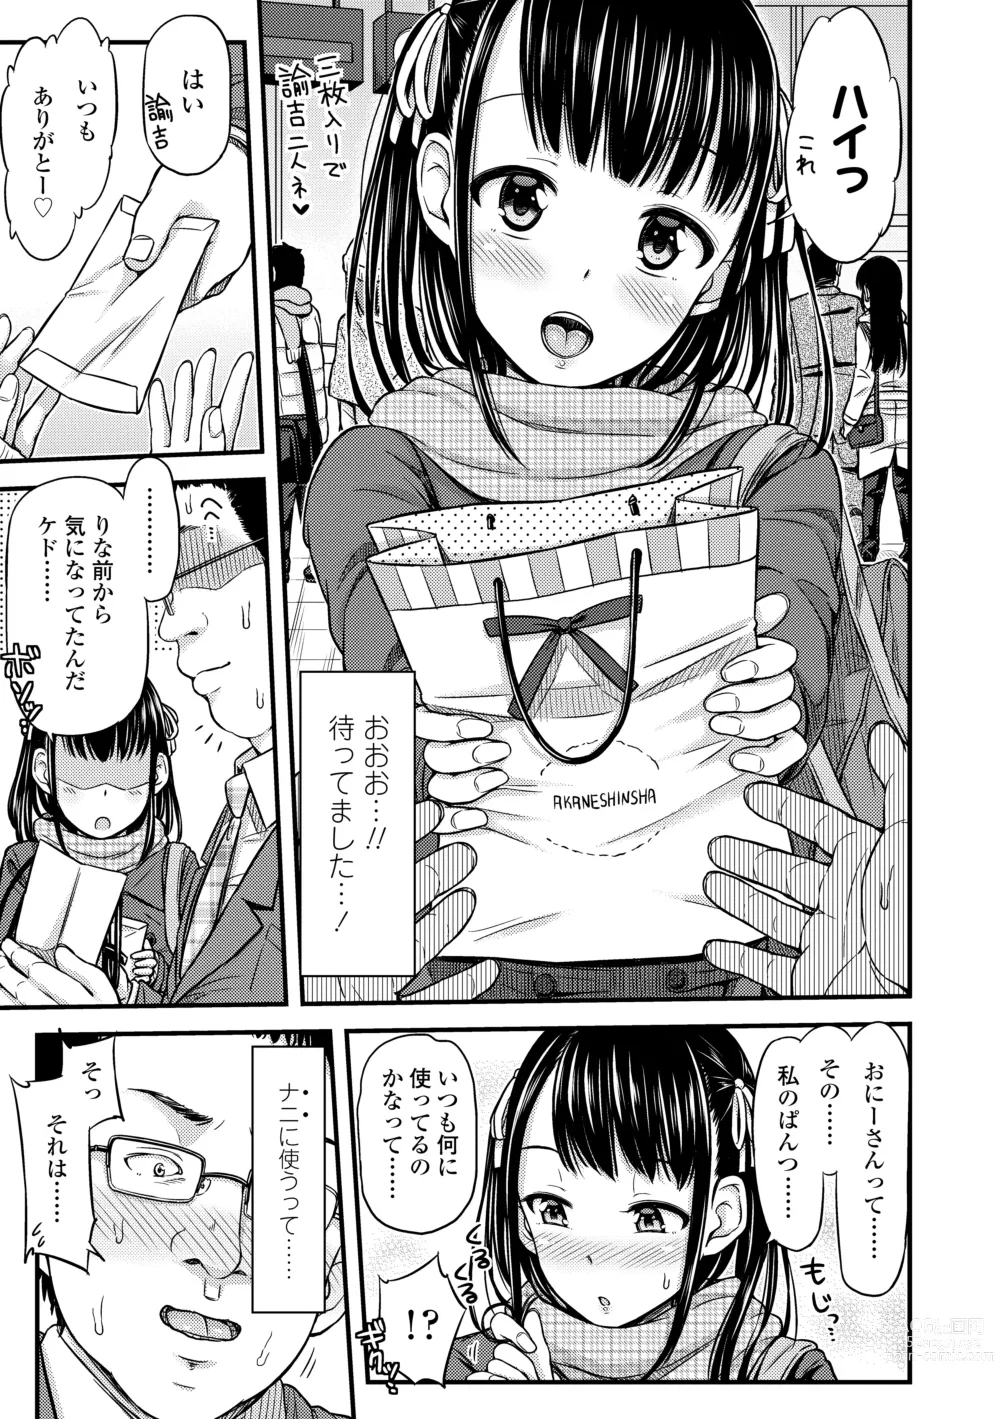 Page 7 of manga JK no Katachi